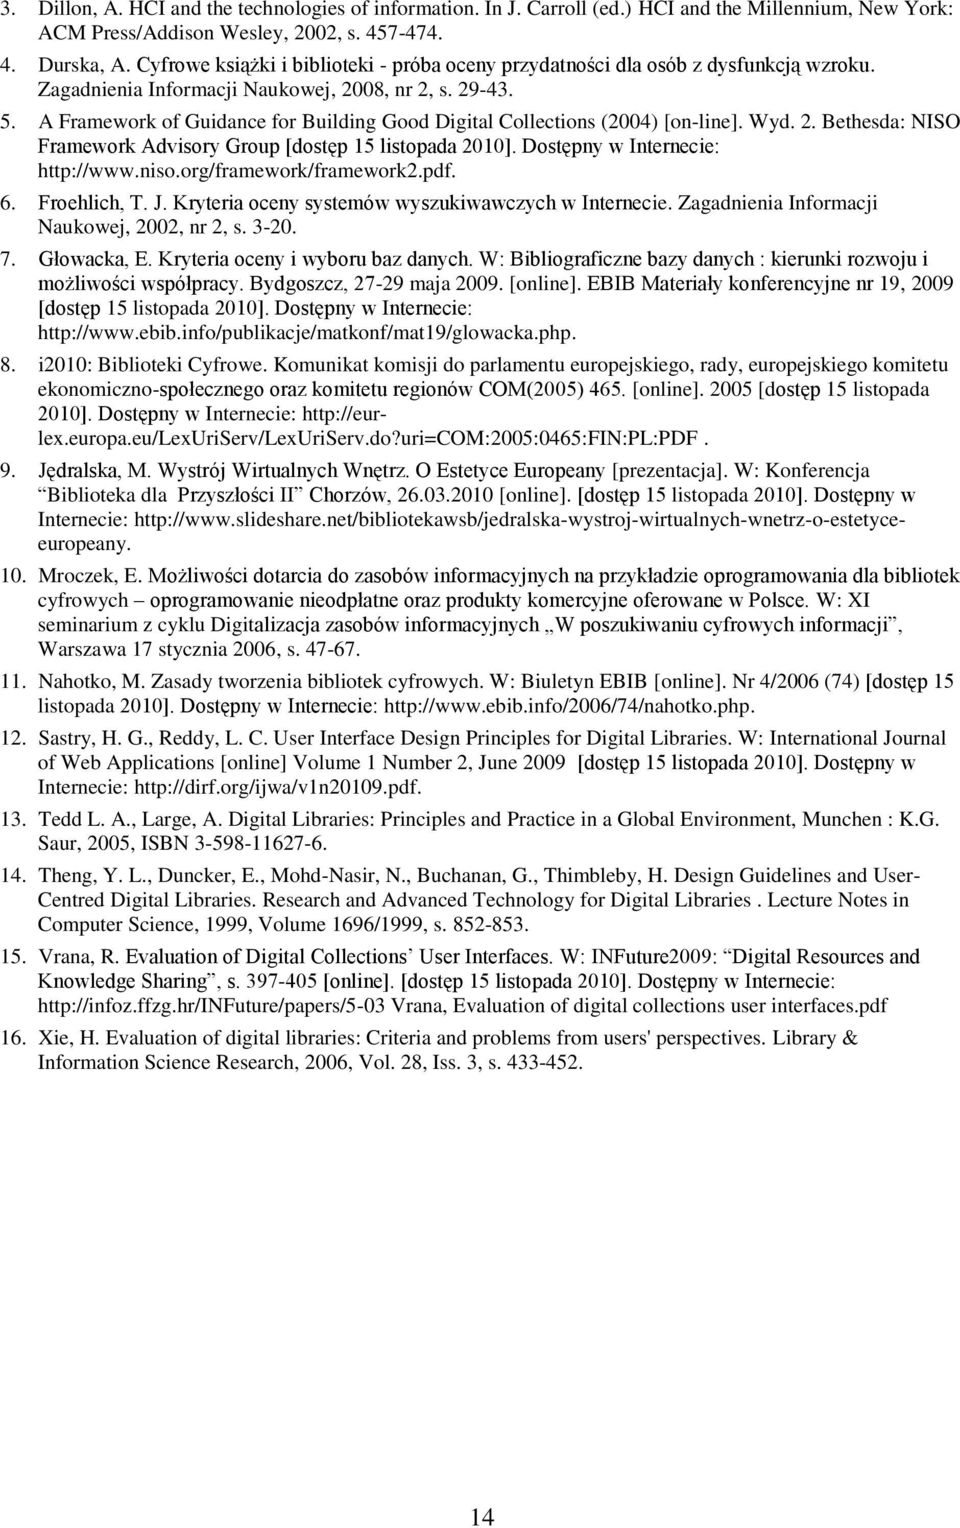 A Framework of Guidance for Building Good Digital Collections (2004) [on-line]. Wyd. 2. Bethesda: NISO Framework Advisory Group [dostęp 15 listopada 2010]. Dostępny w Internecie: http://www.niso.